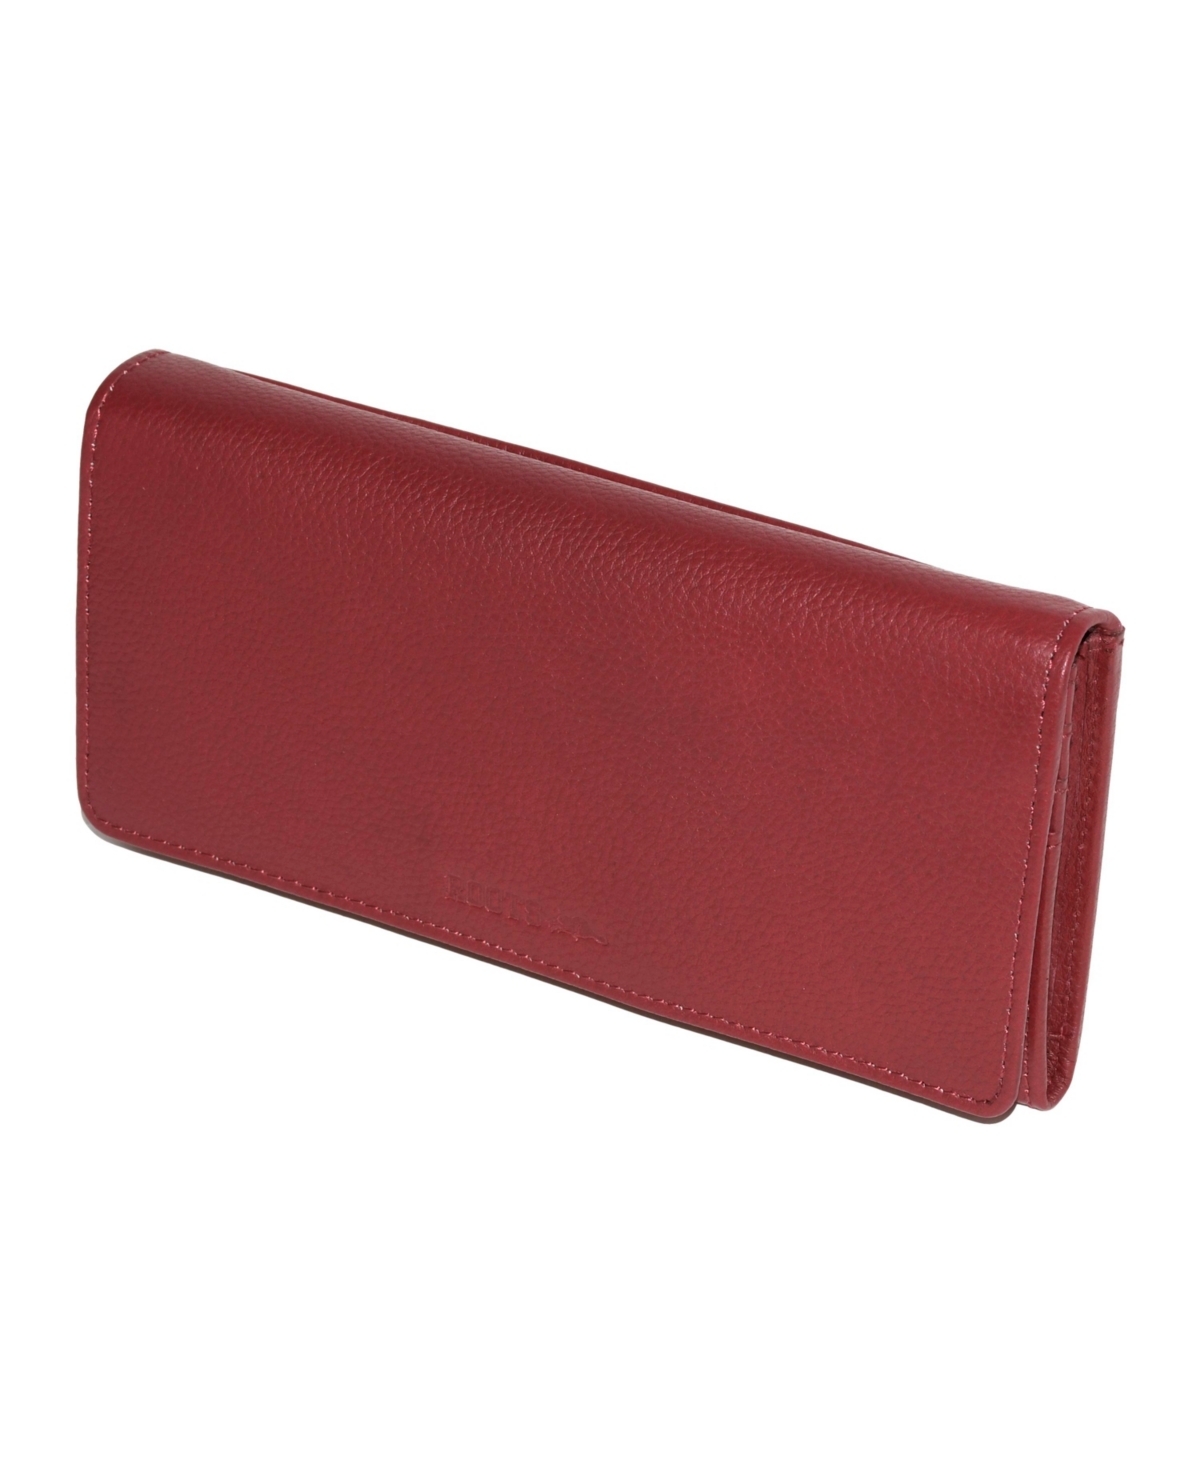 Ladies Leather Expander Clutch Wallet - Purple